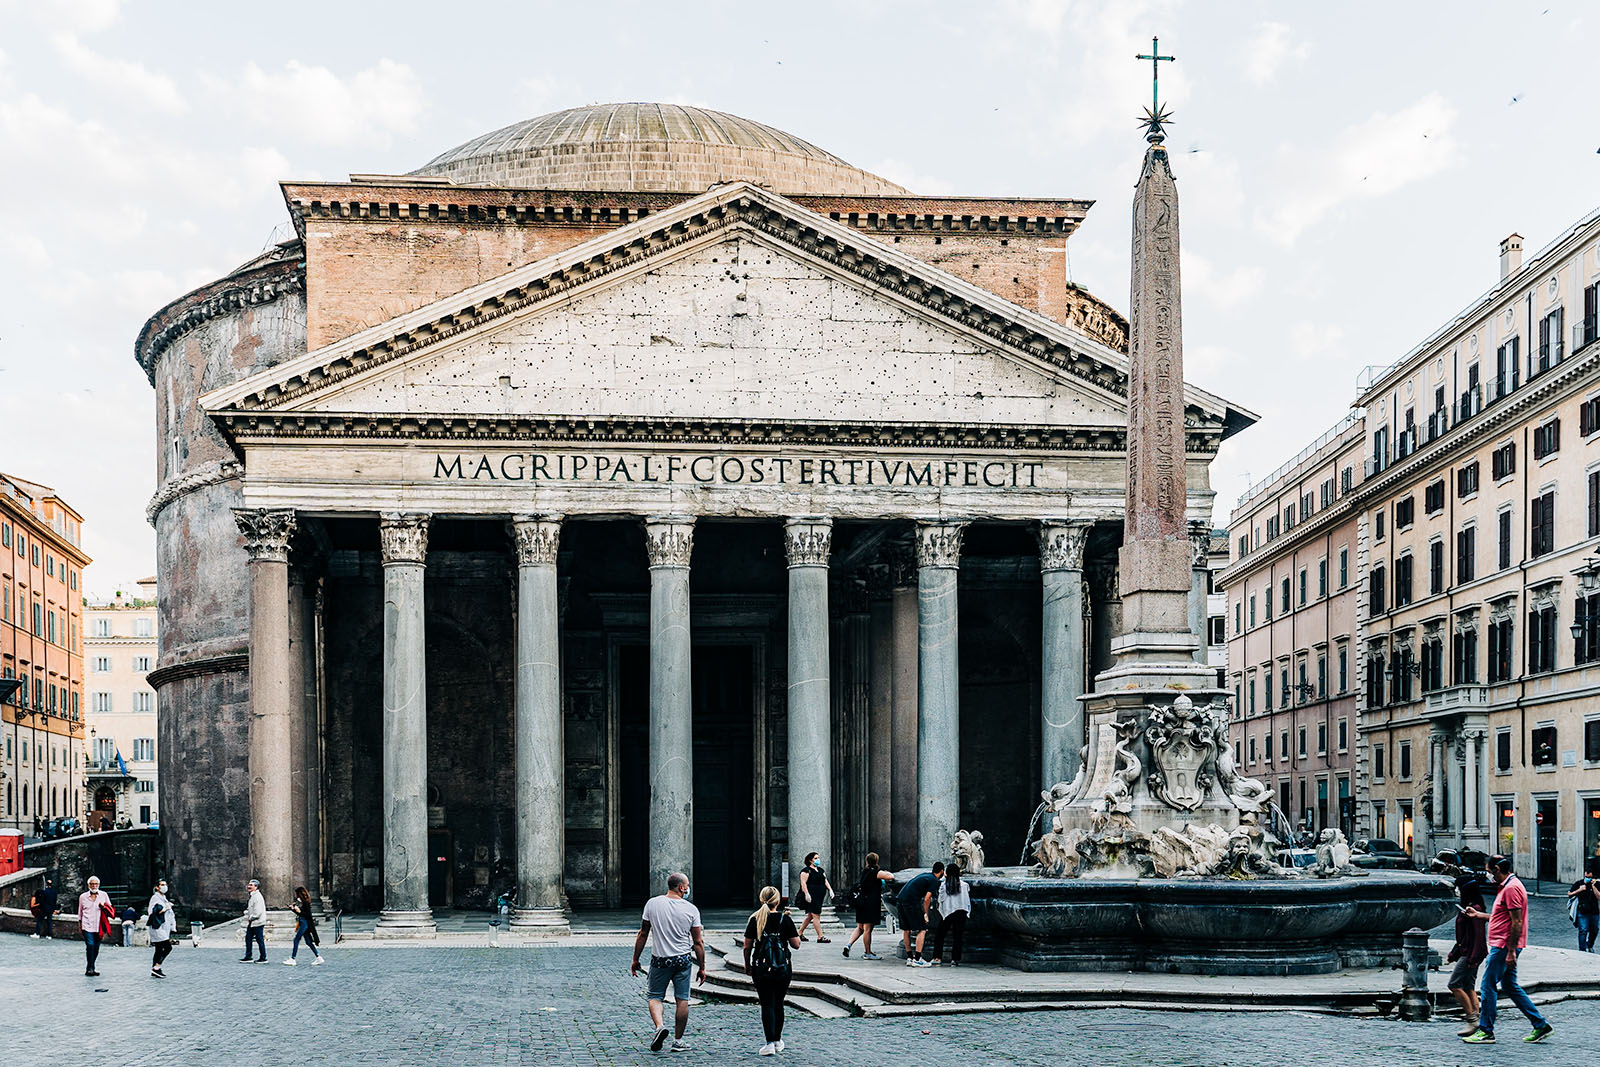 Pantheon i Roma sett fra piazza della rotonda